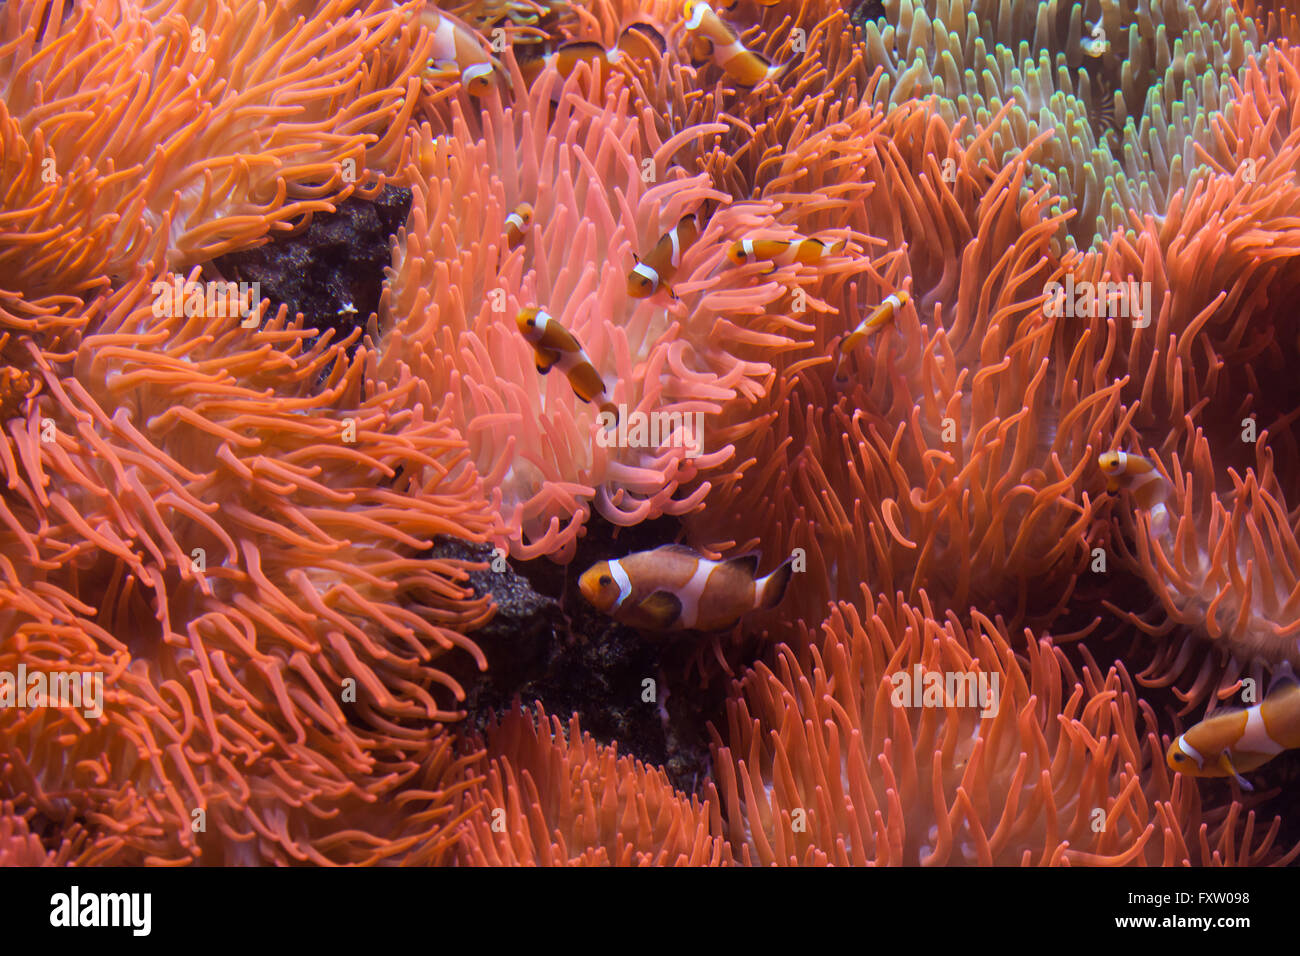 Ocellaris clownfish (Amphiprion ocellaris) swimming in the magnificent sea anemone (Heteractis magnifica) in the Genoa Aquarium in Genoa, Liguria, Italy. Stock Photo